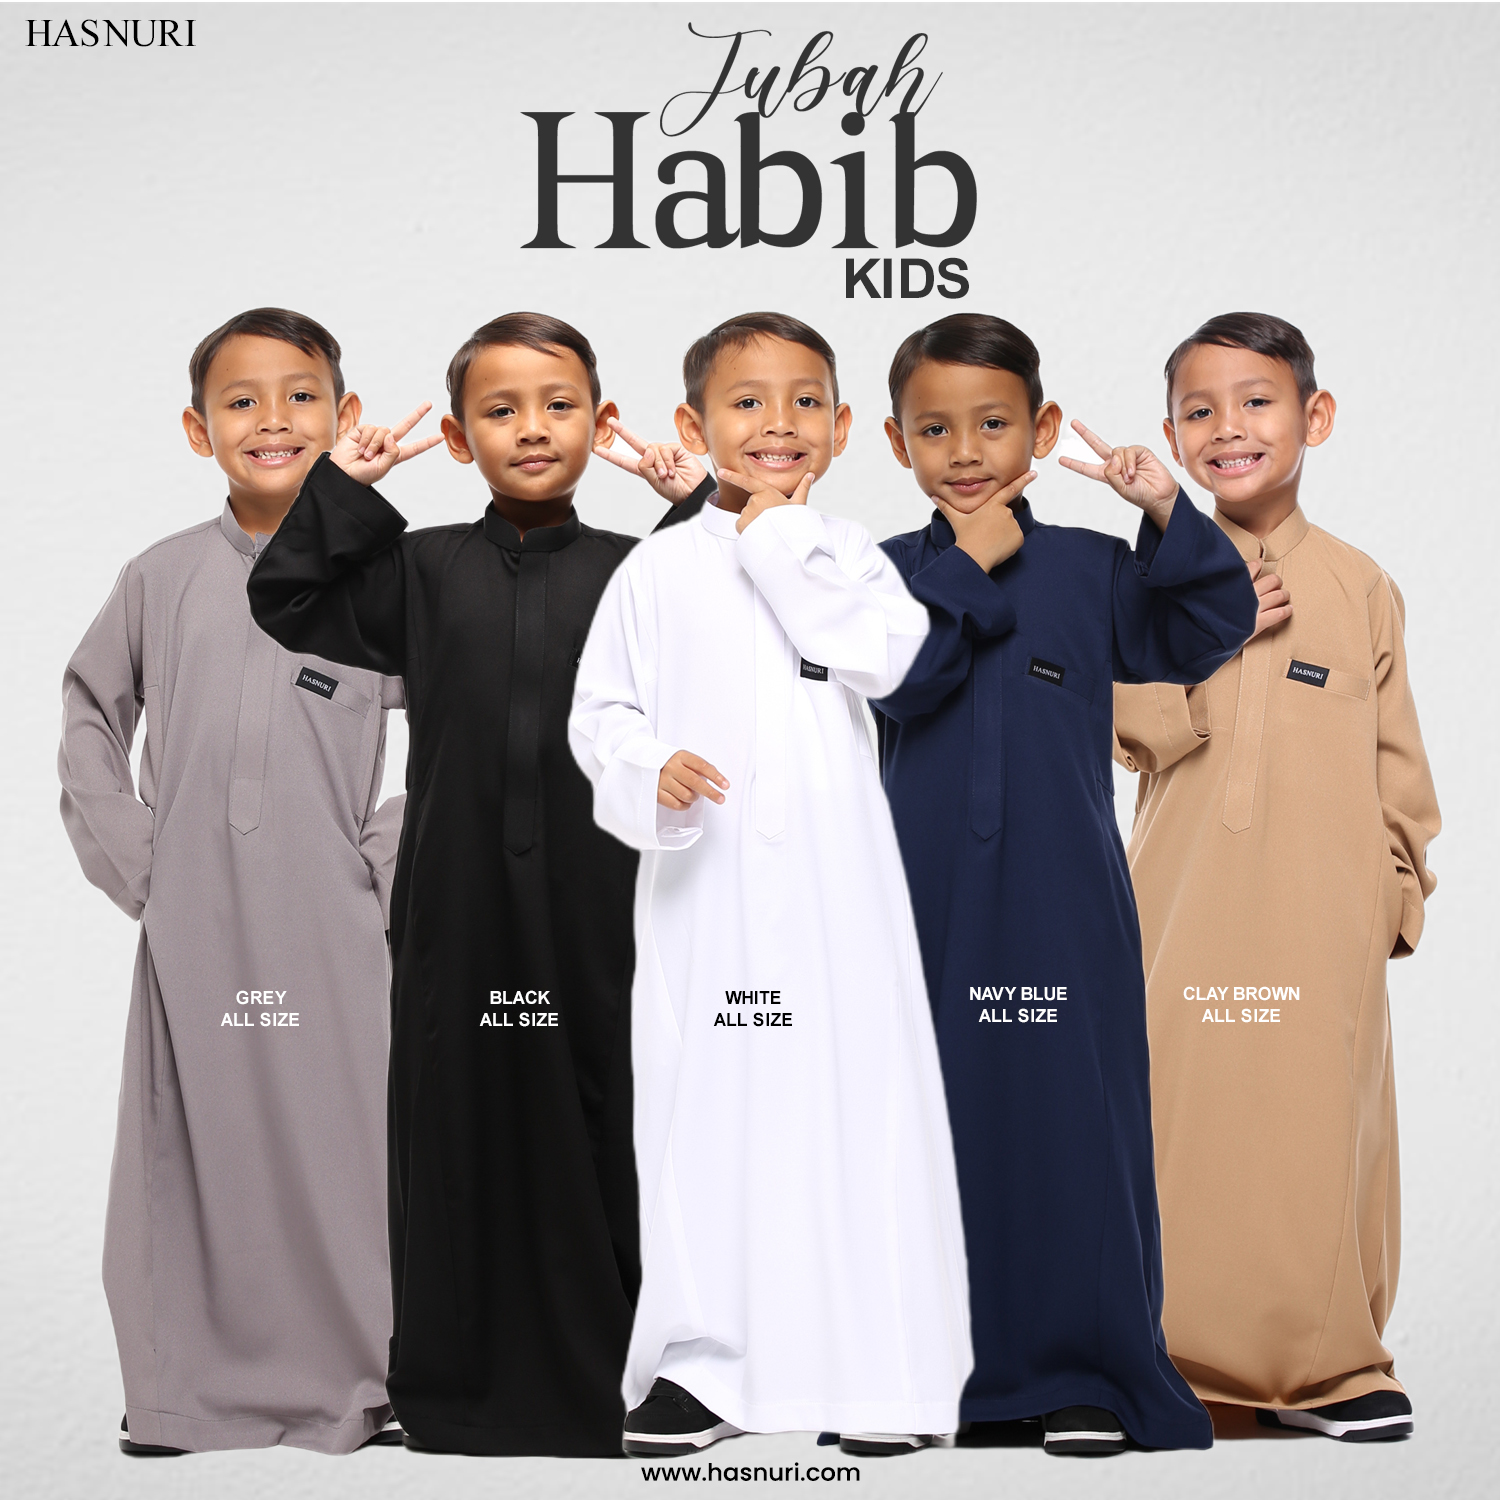 Jubah Habib Kids - Clay Brown